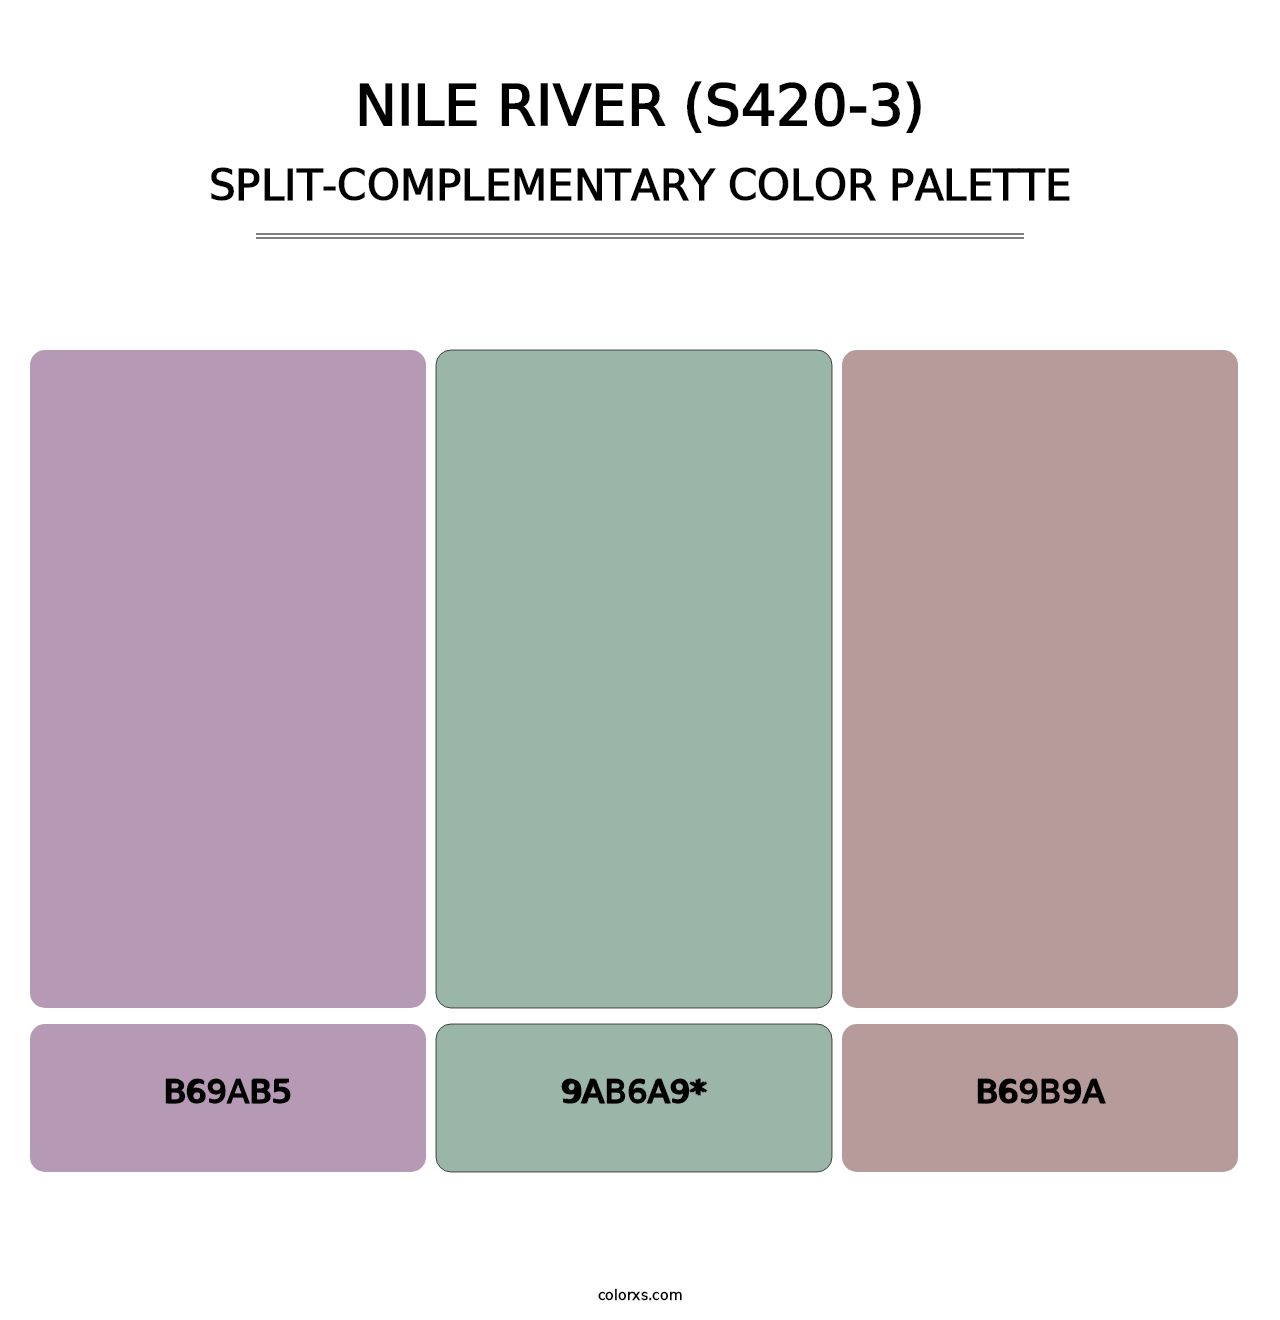 Nile River (S420-3) - Split-Complementary Color Palette